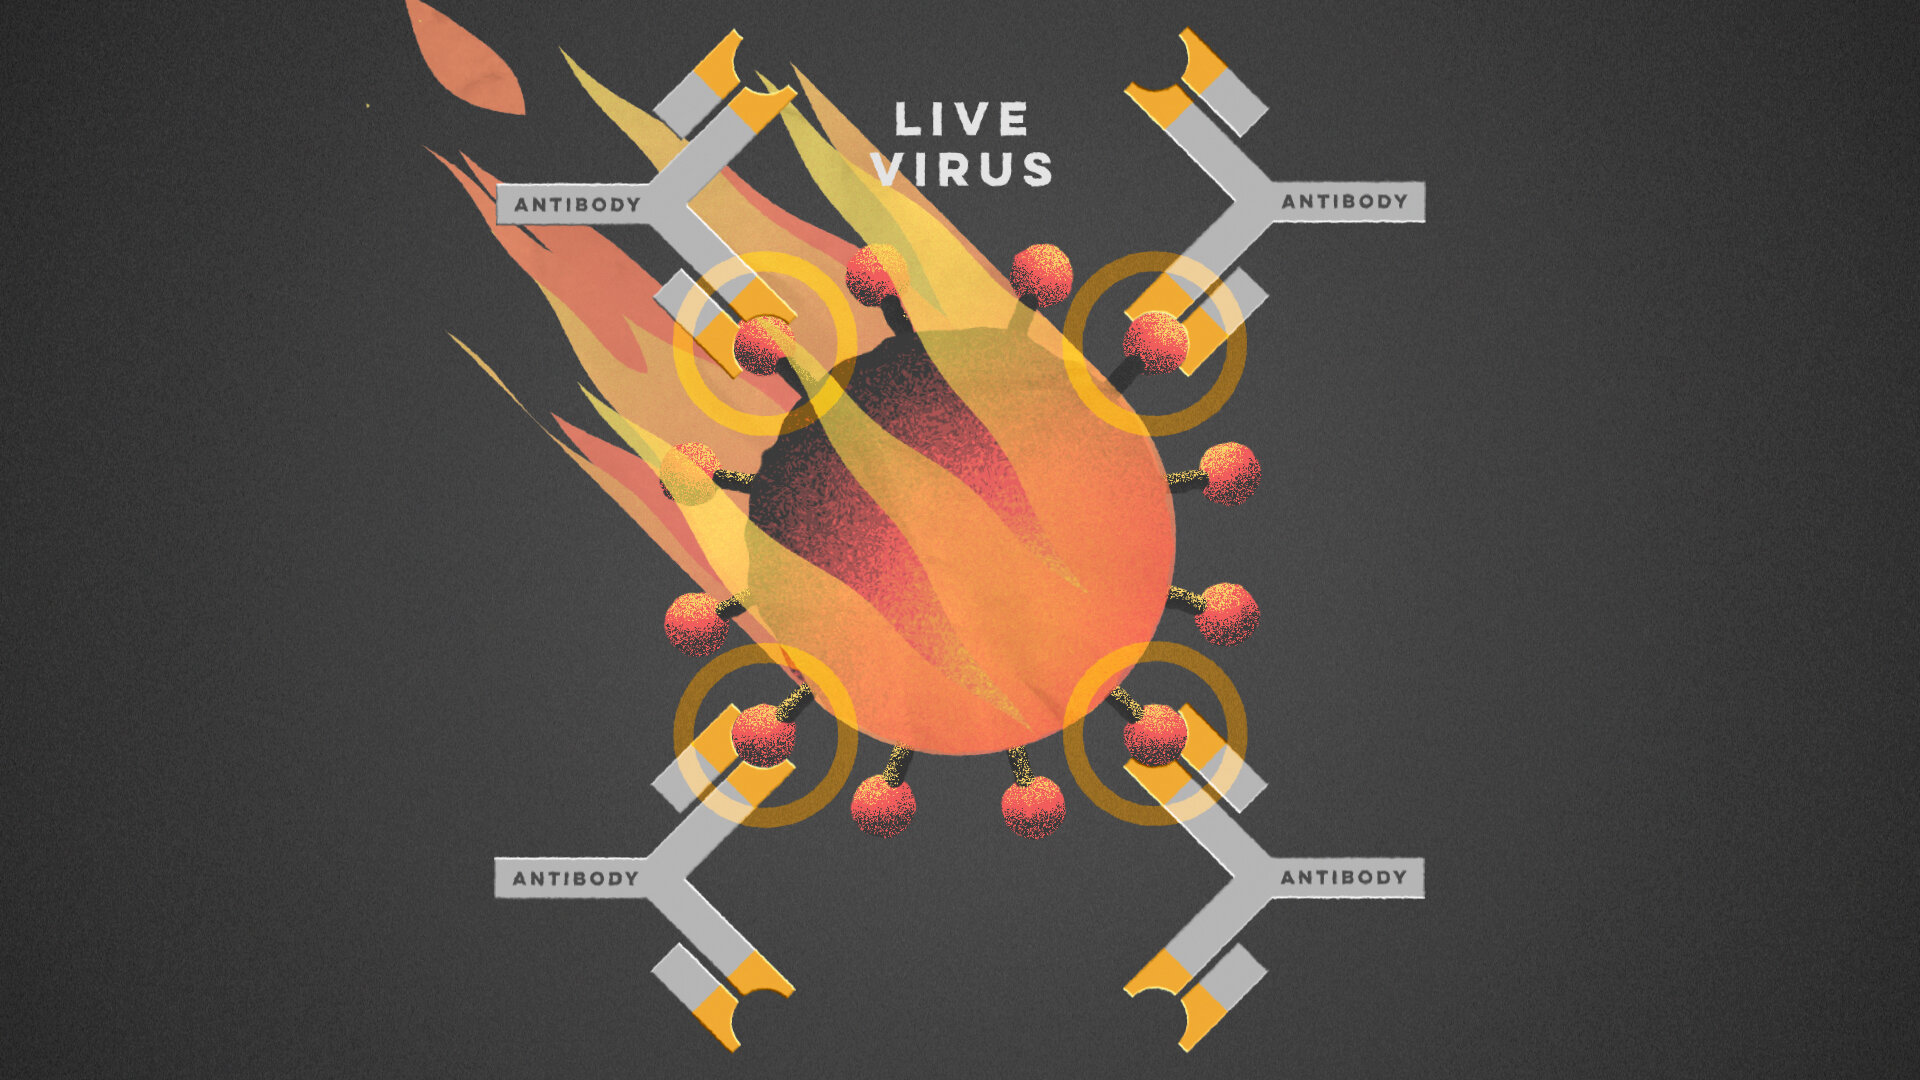 TED_Vaccines_12_AntibodiesLiveVirus.jpg